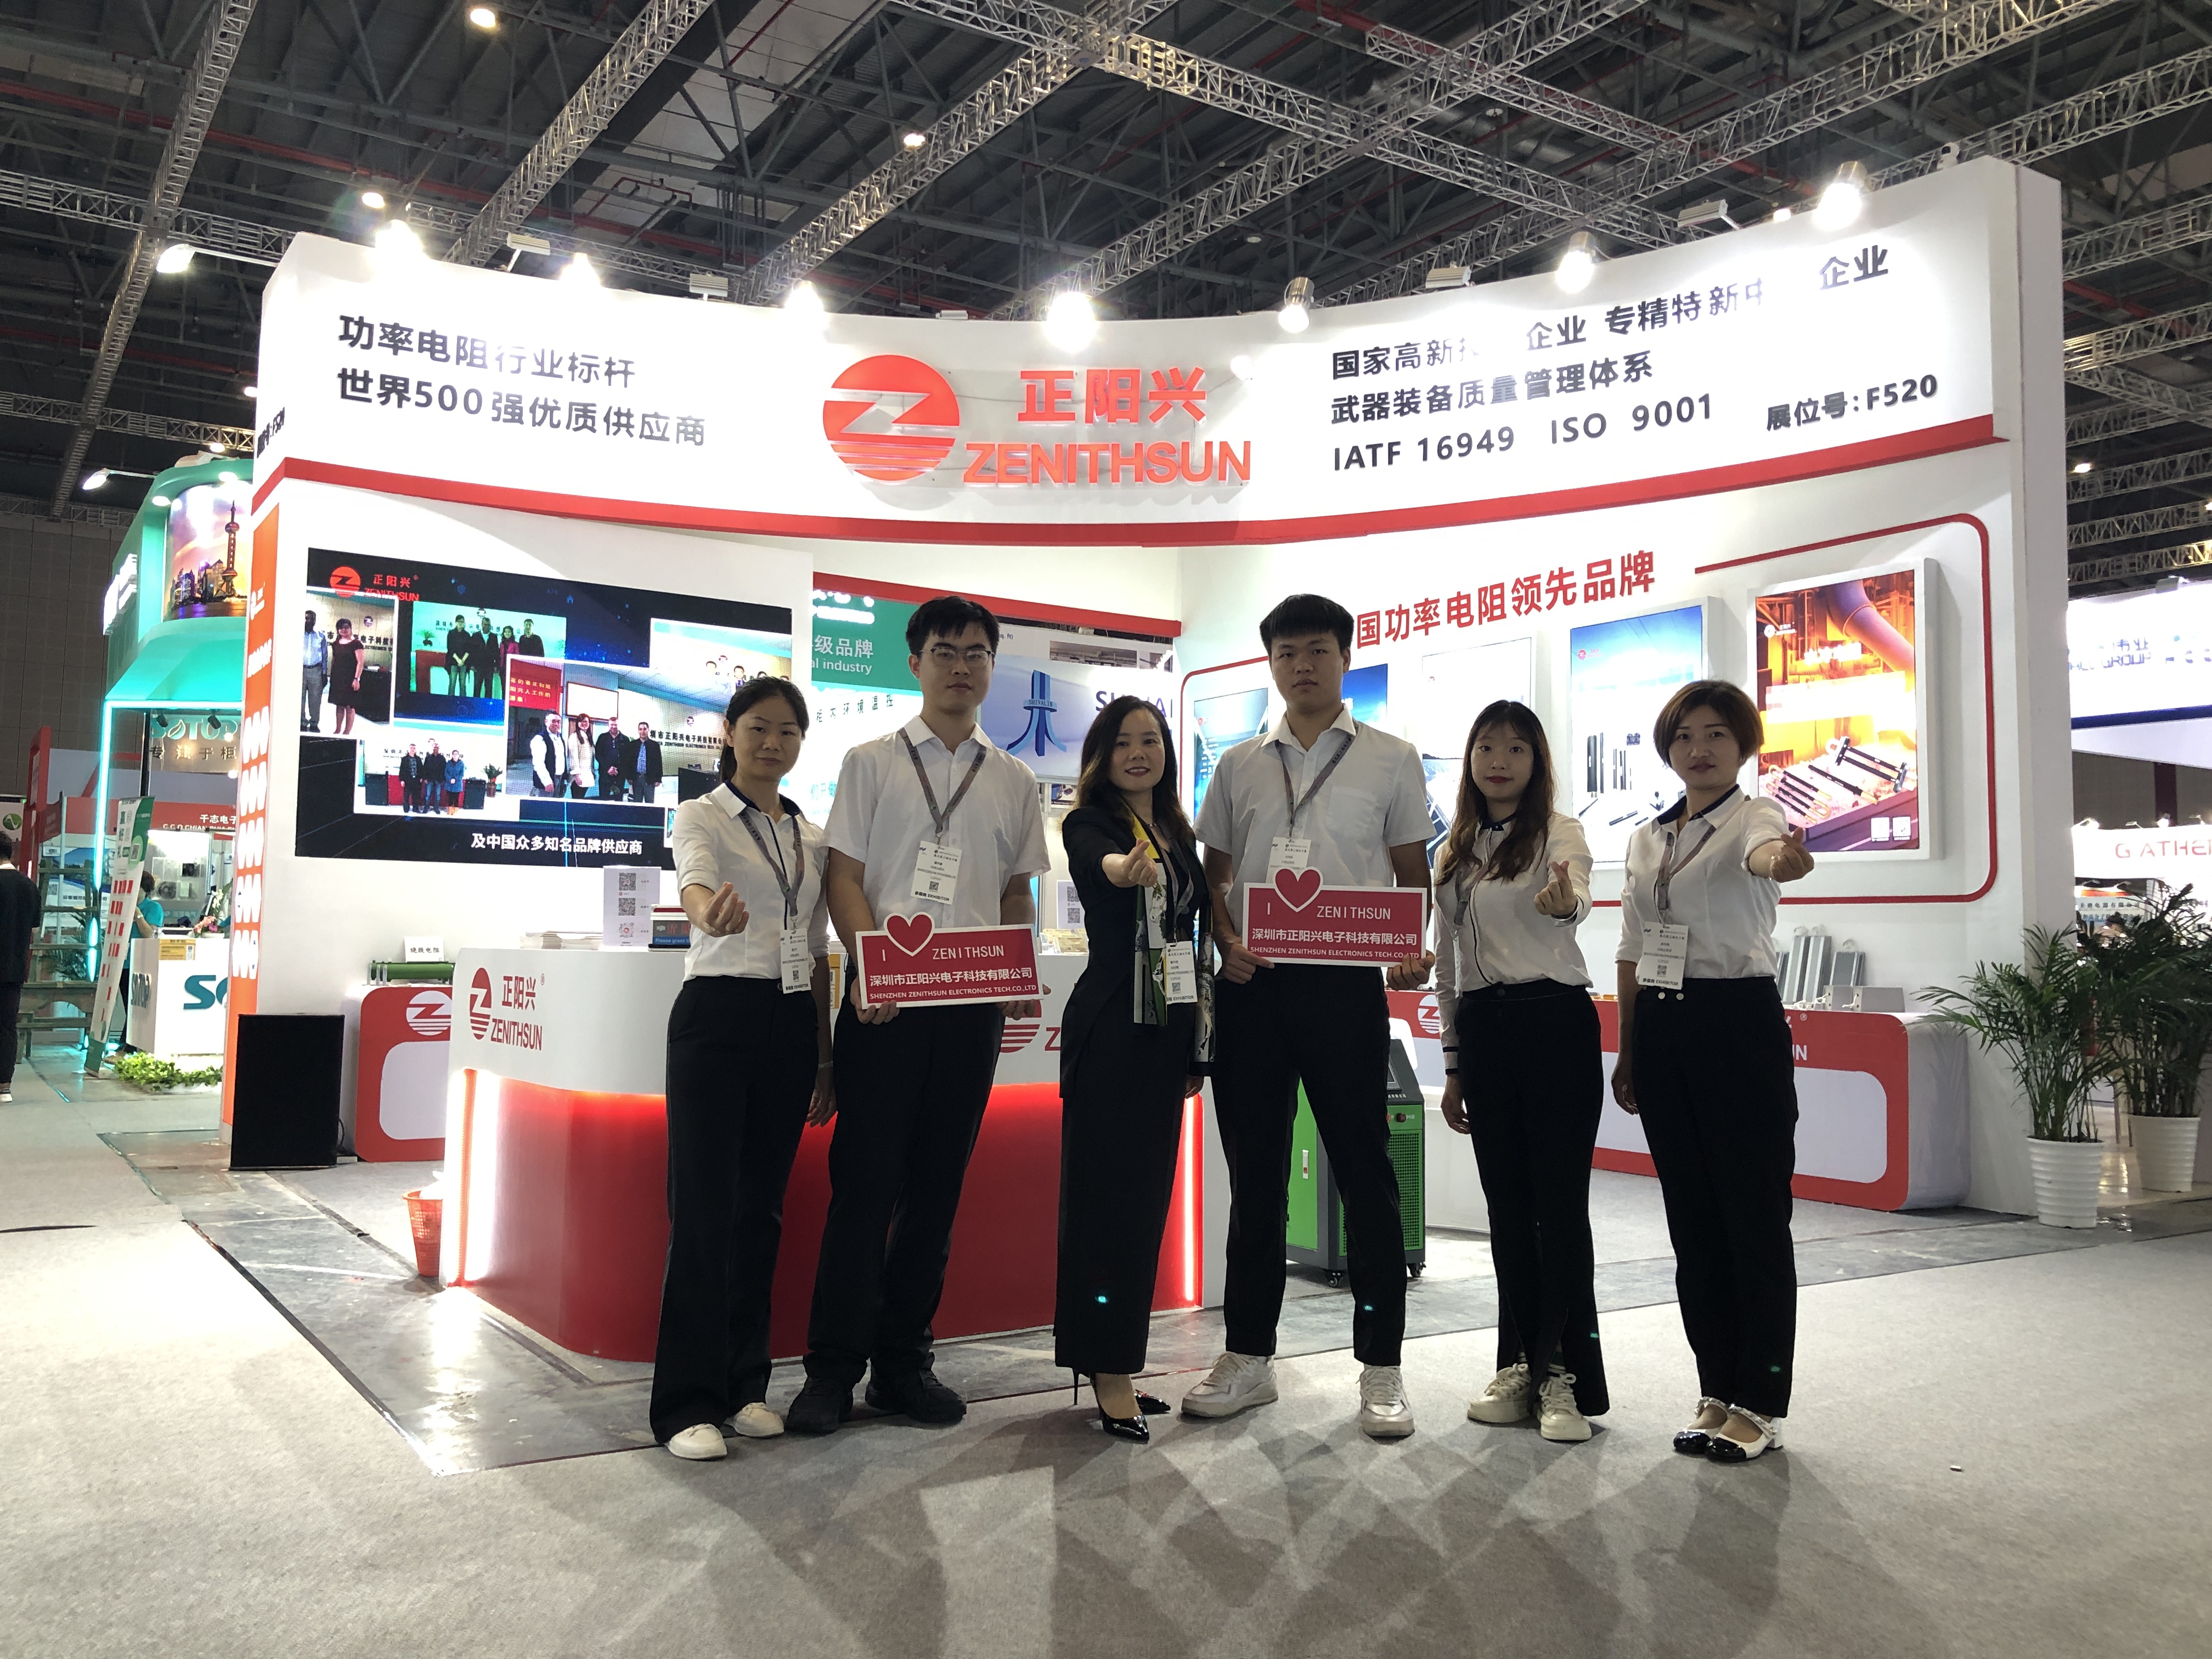 La fira d'electrònica ZENITHSUN de Munic a Xangai acaba amb èxit